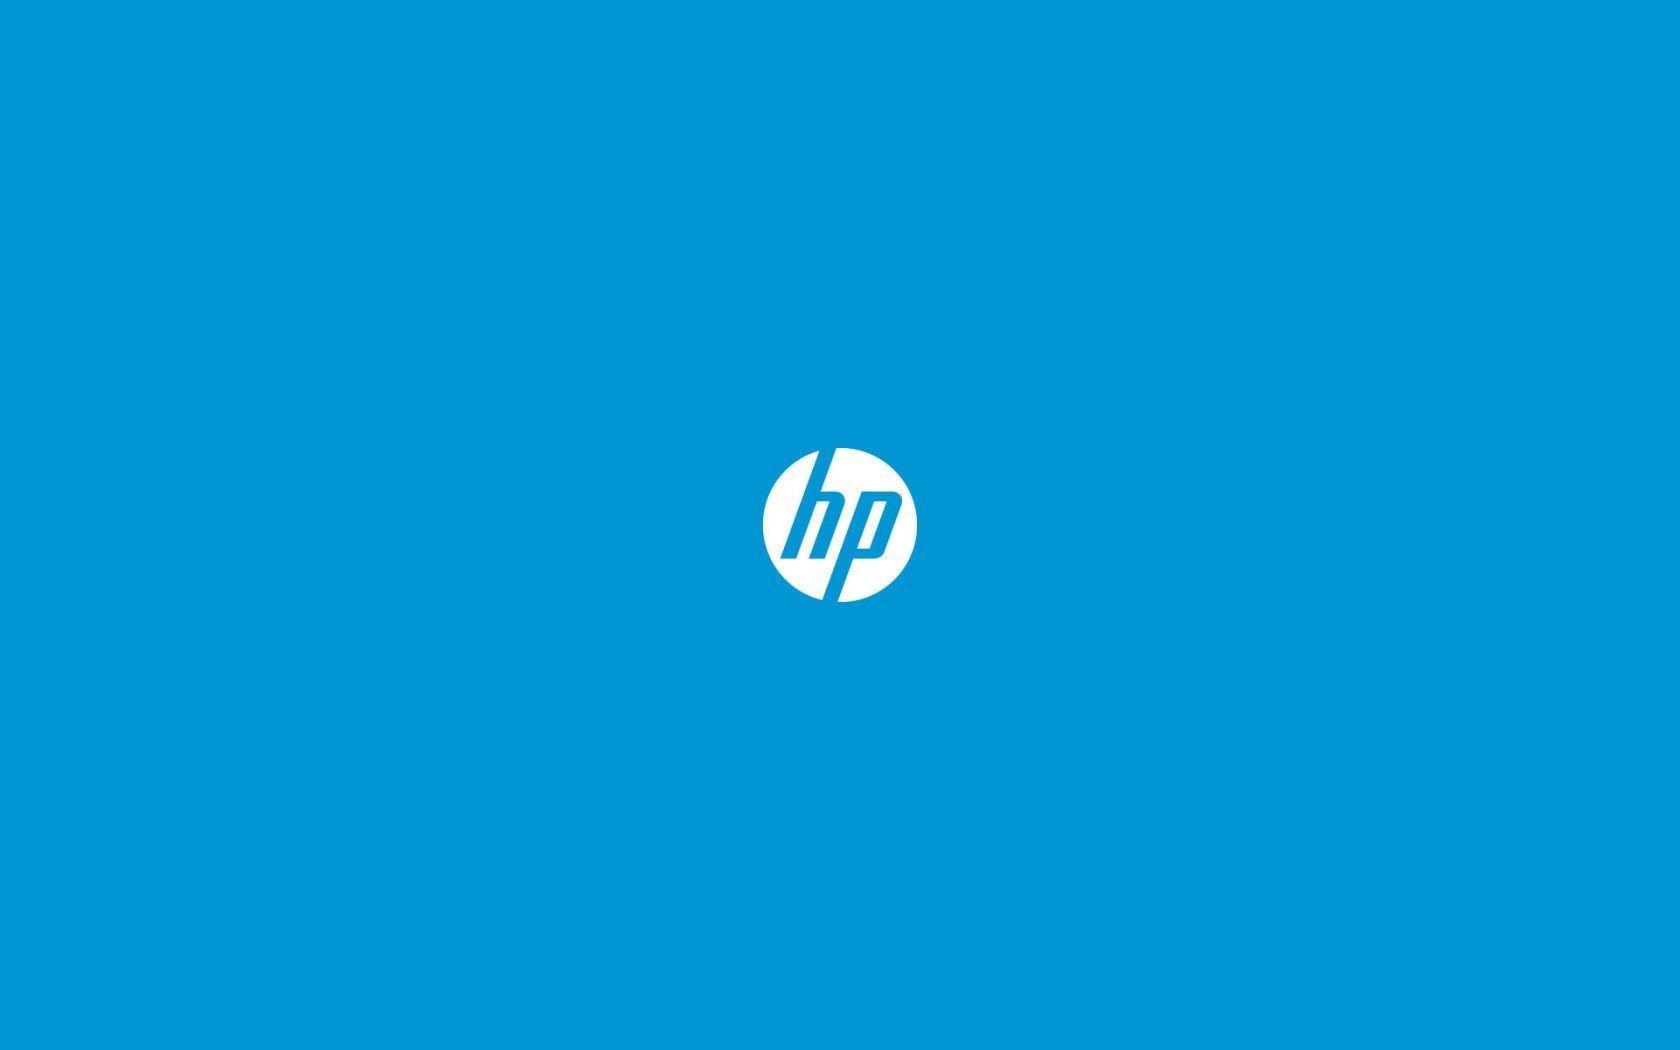 Hp Logo Blue Hd Wallpaper Background Uhd 2k 4k 5k 2015 2016 Tablet